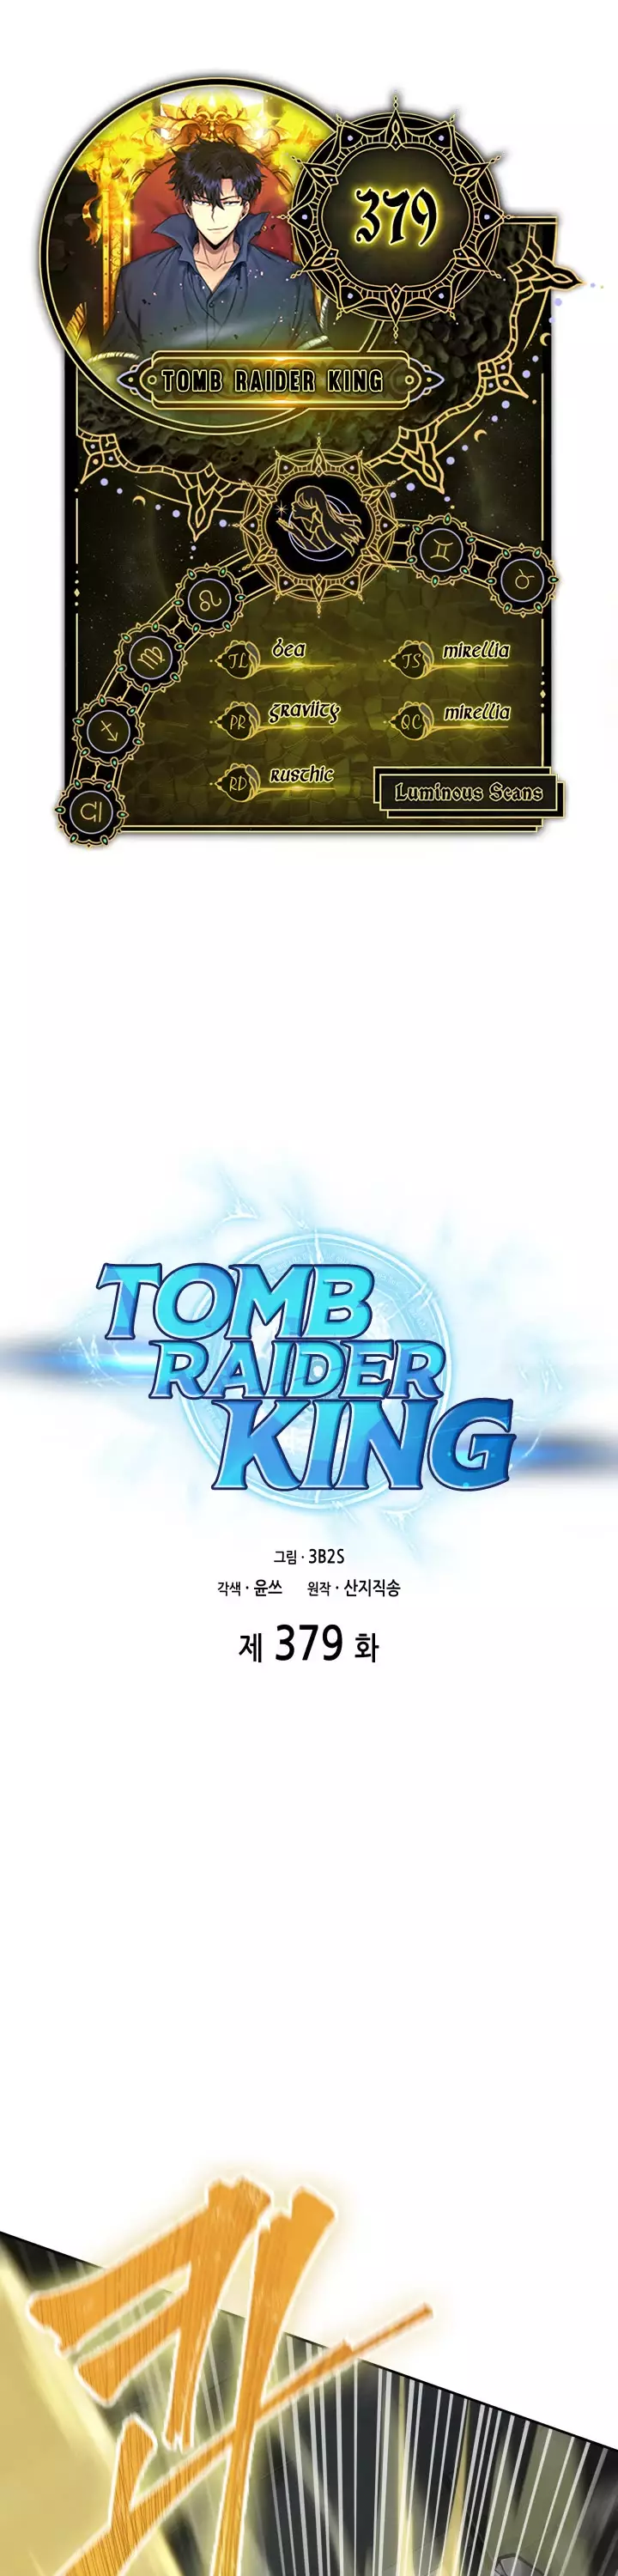 Tomb Raider King - 379 page 1-c1bb1f97